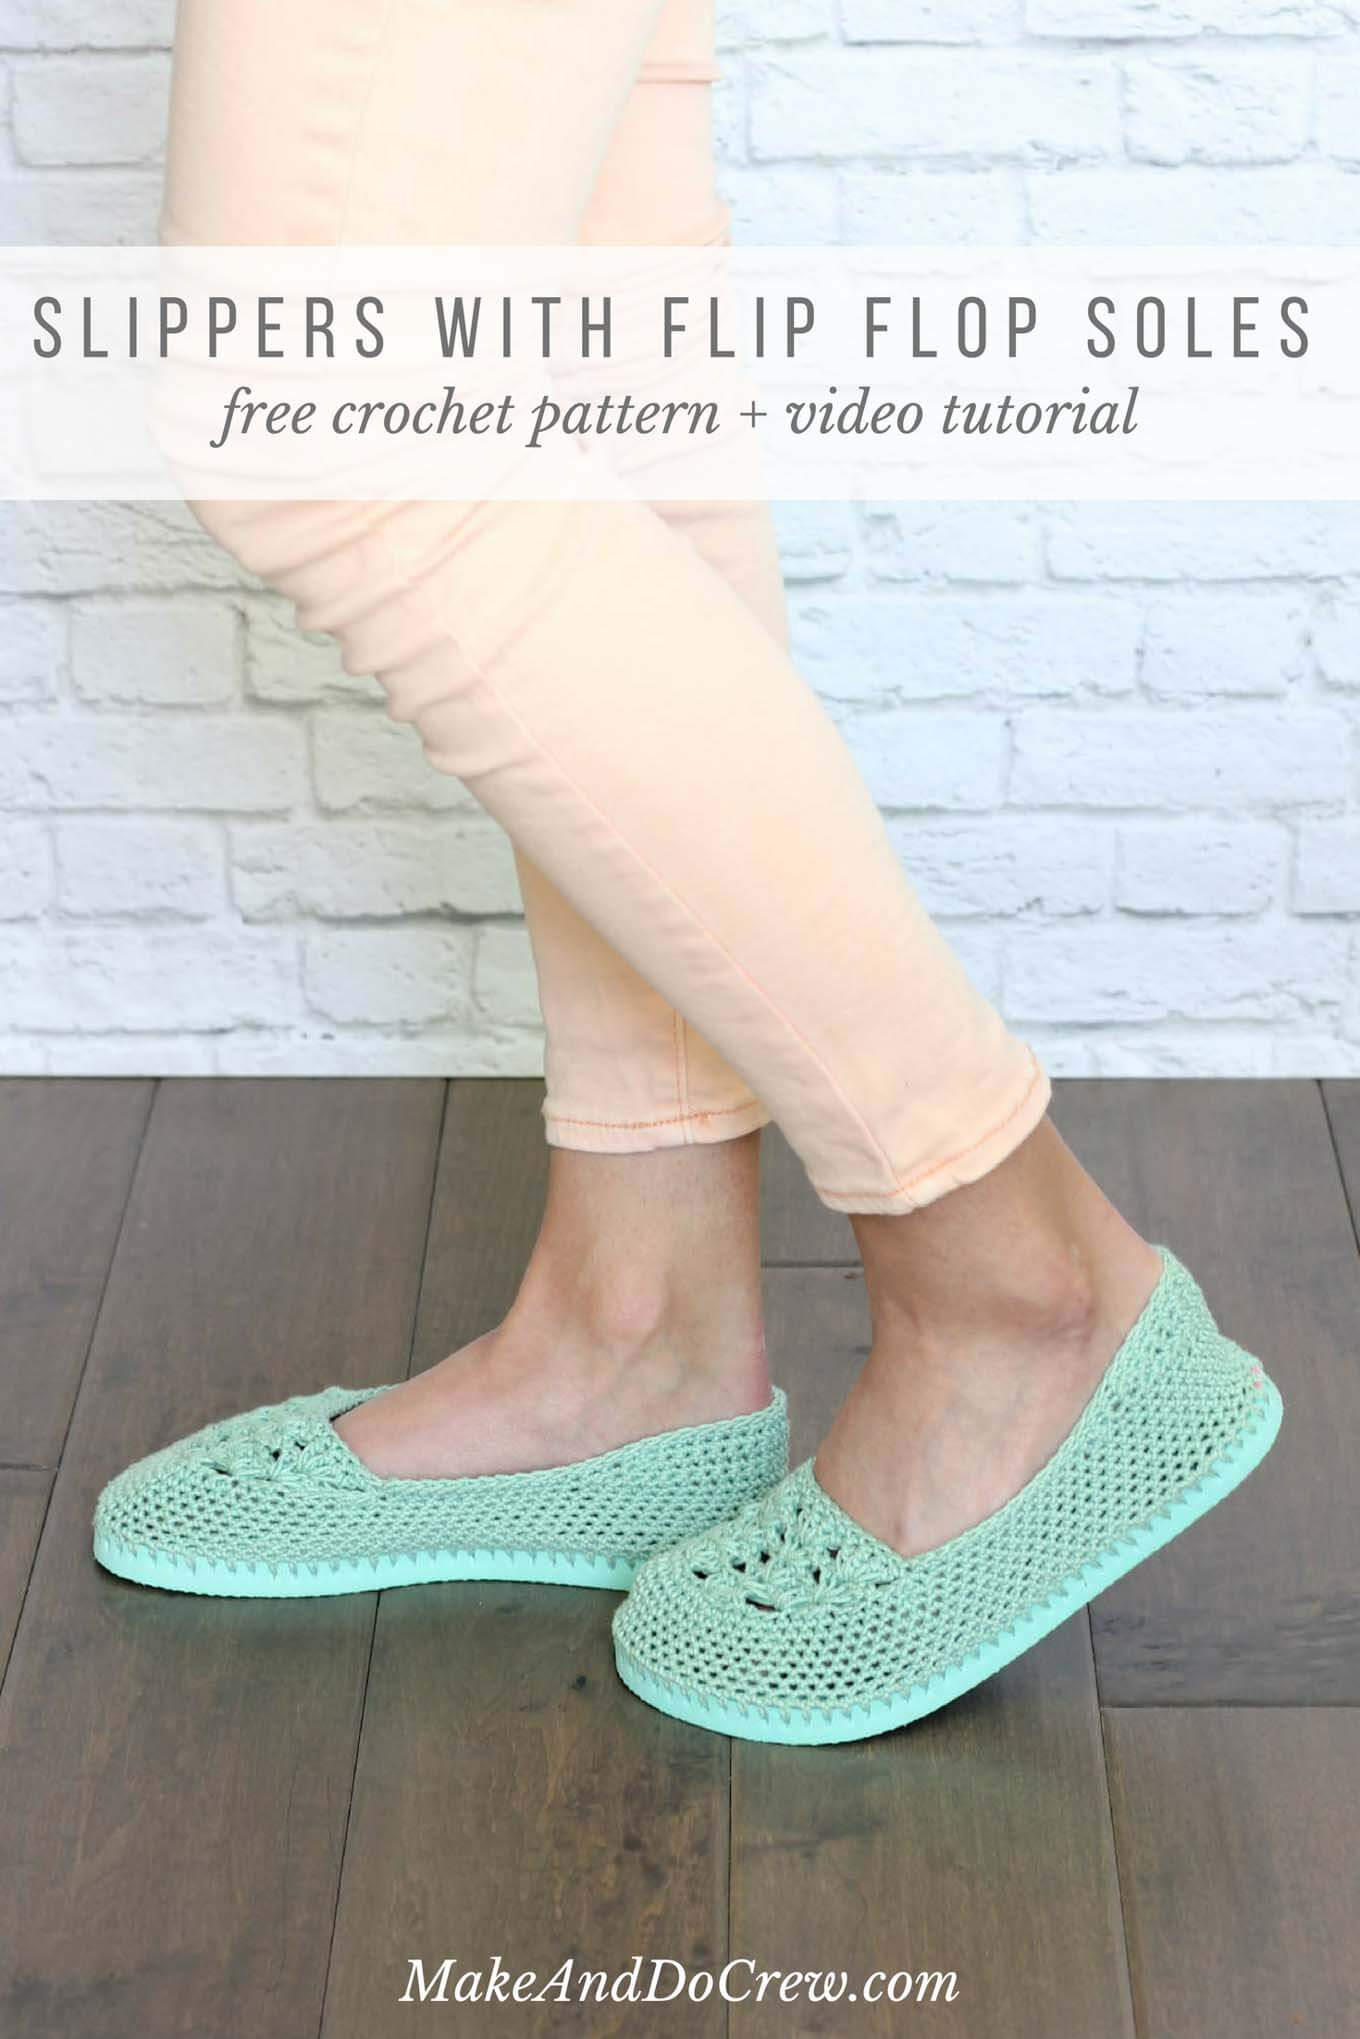 Crochet Bootie Pattern For Adults Crochet Slippers With Flip Flop Soles Free Pattern Video Tutorial